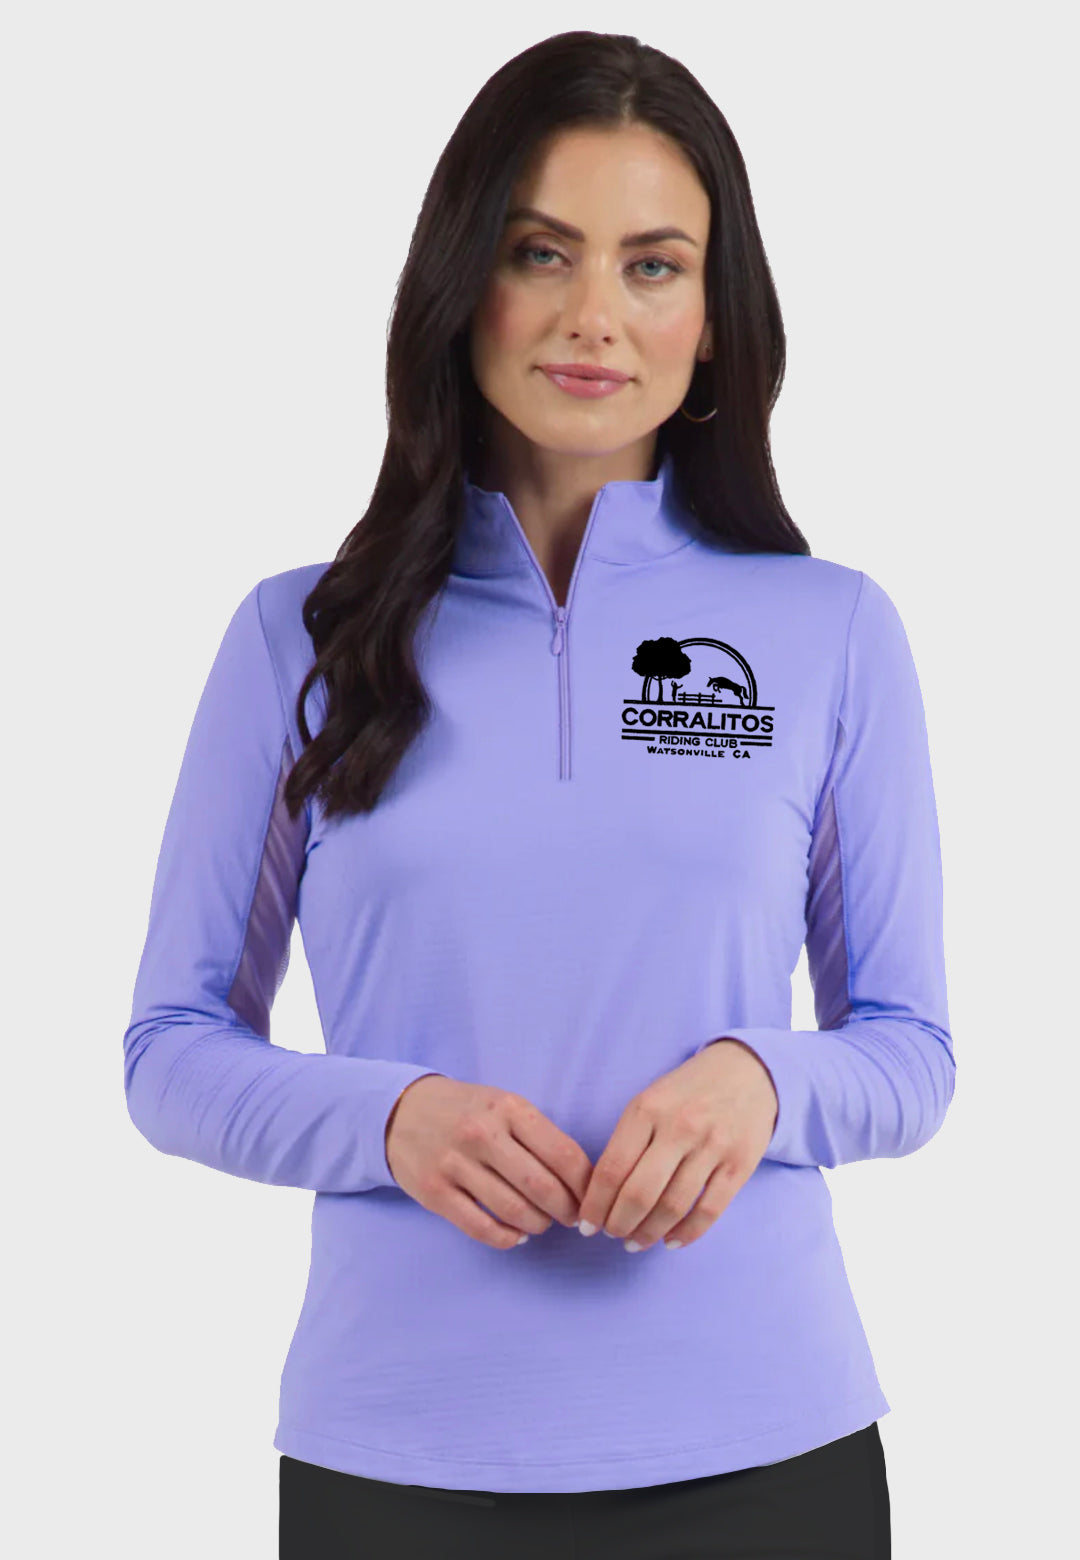 Corralitos Riding Club IBKÜL® Ladies Long Sleeve Sun Shirt - 2 Color Options